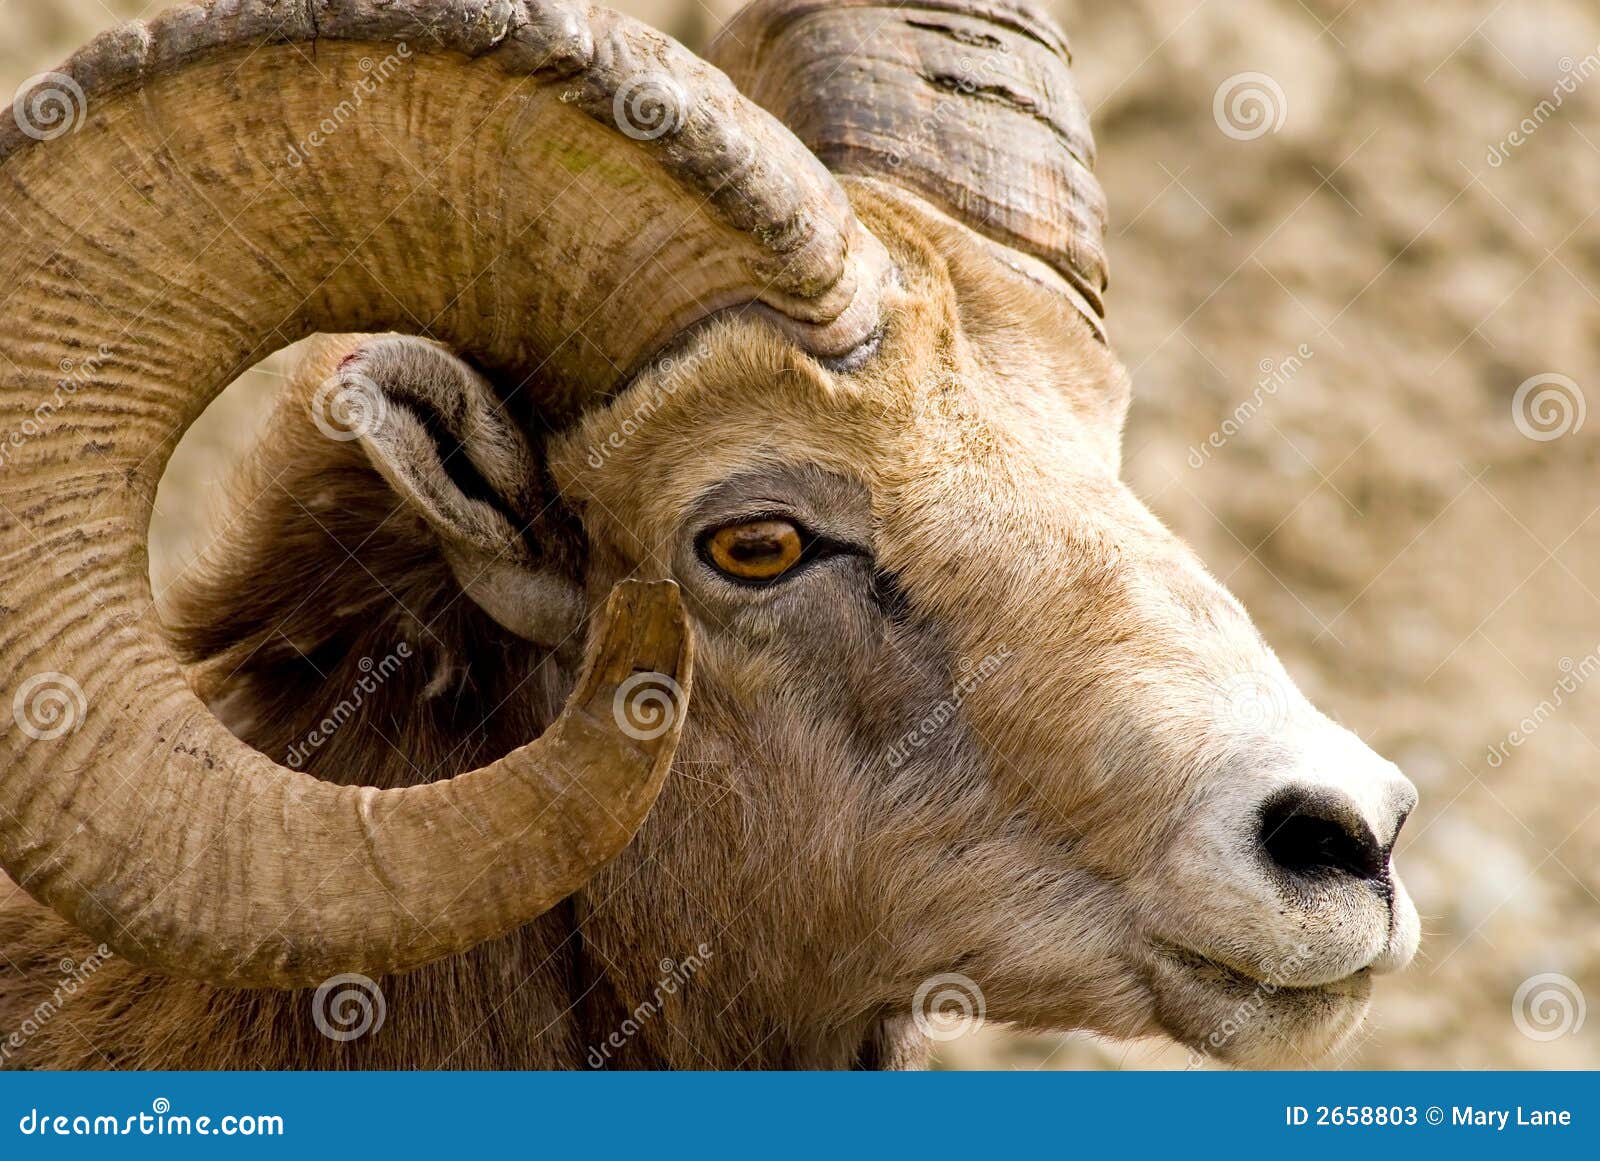 Big Horned Mountain Sheep stock image. Image of animal - 2658803